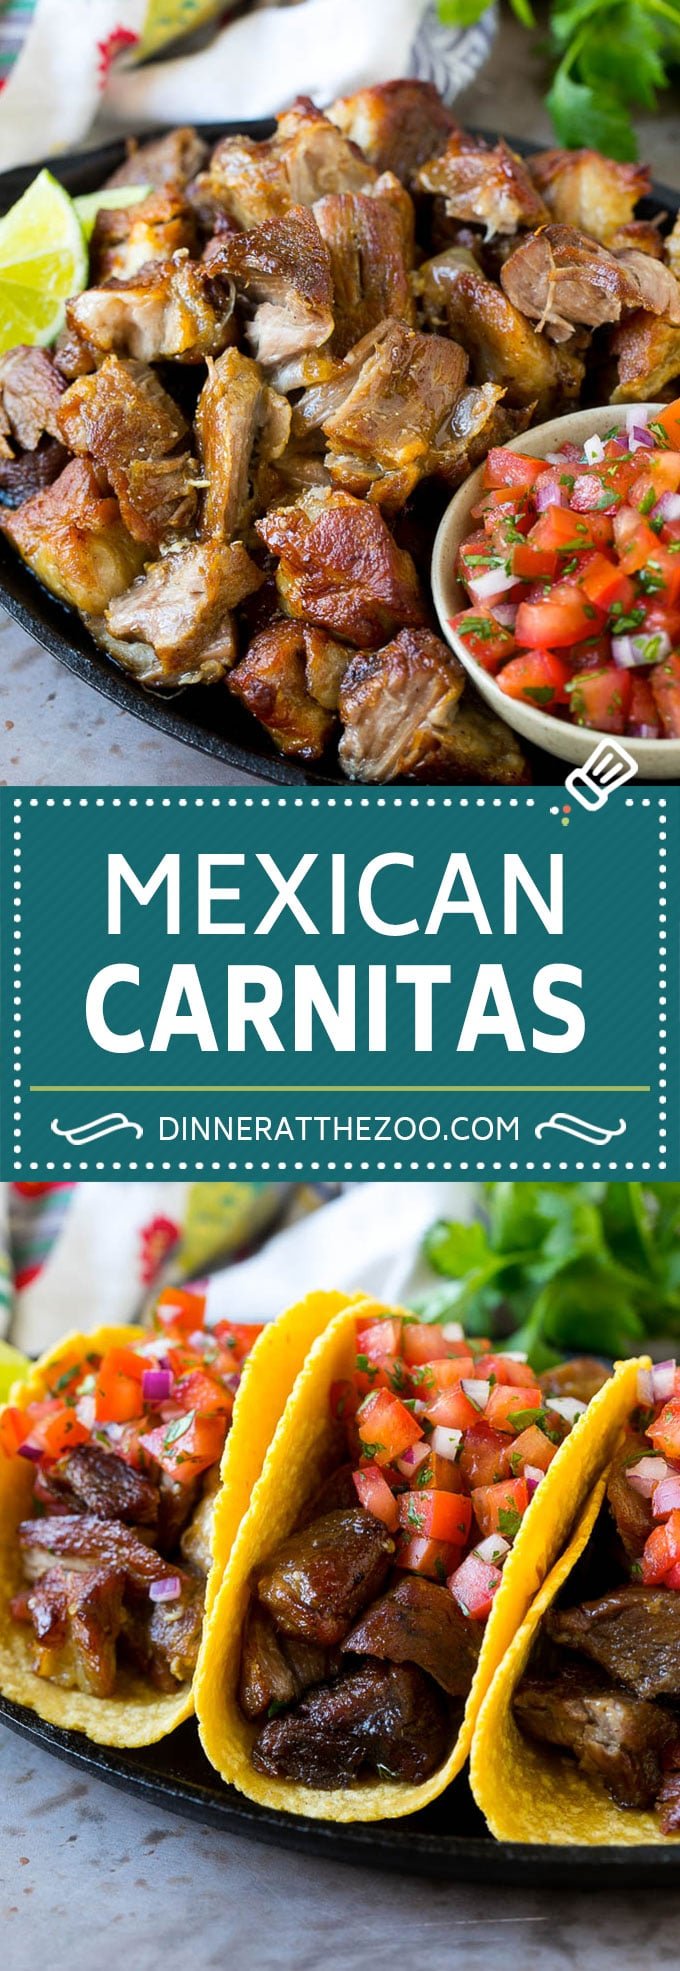 Pork Carnitas Recipe | Mexican Pulled Pork | Pork Tacos #pork #mexicanfood #glutenfree #lowcarb #keto #tacos #dinneratthezoo